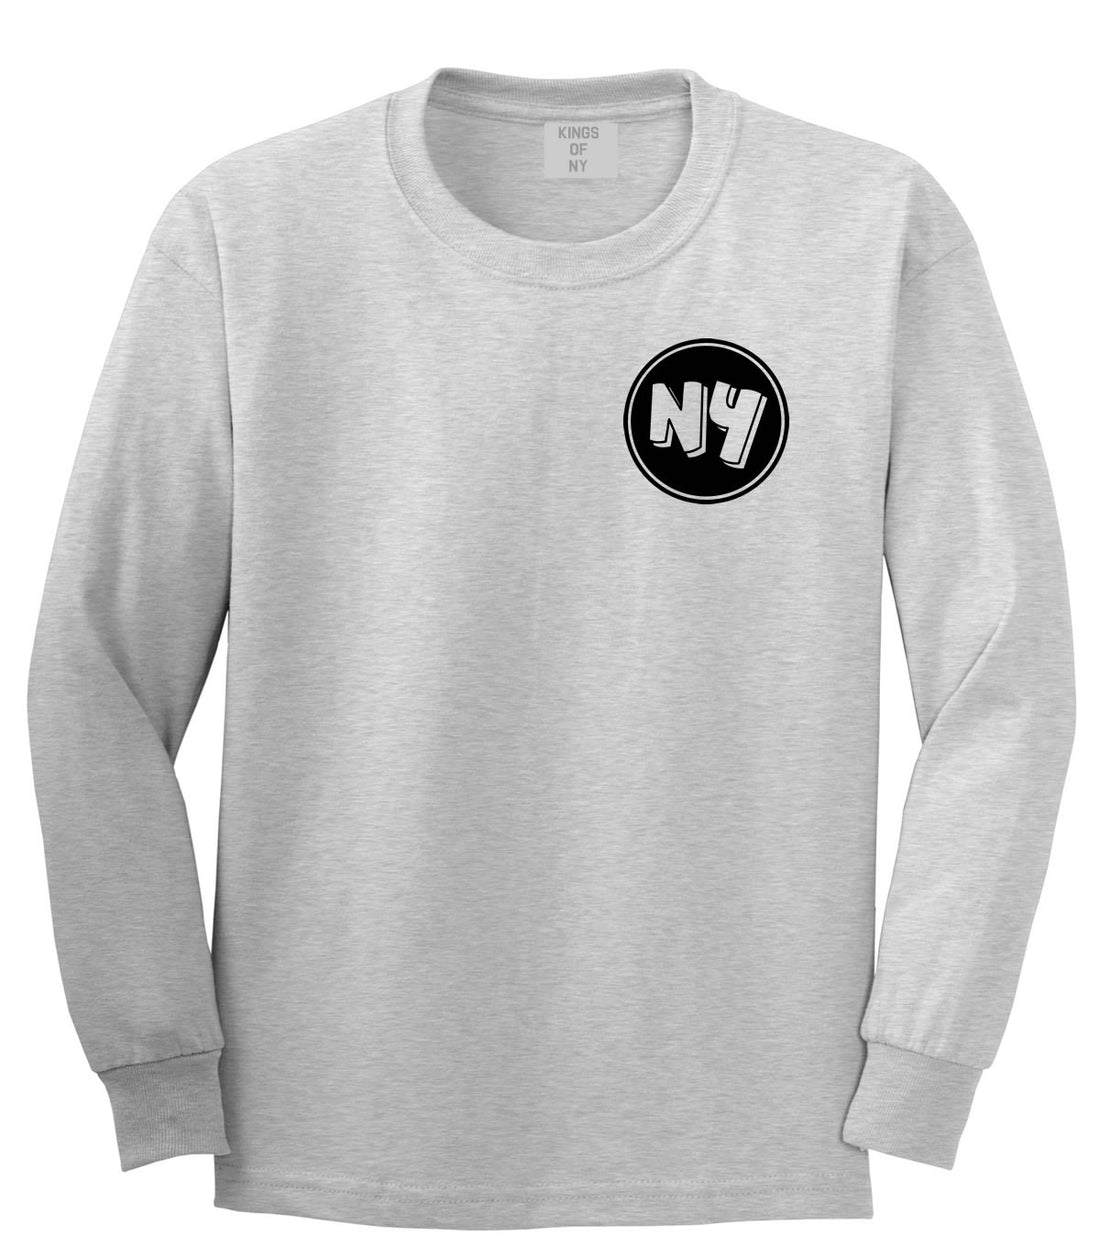 NY Circle Chest Logo Long Sleeve T-Shirt in Grey By Kings Of NY